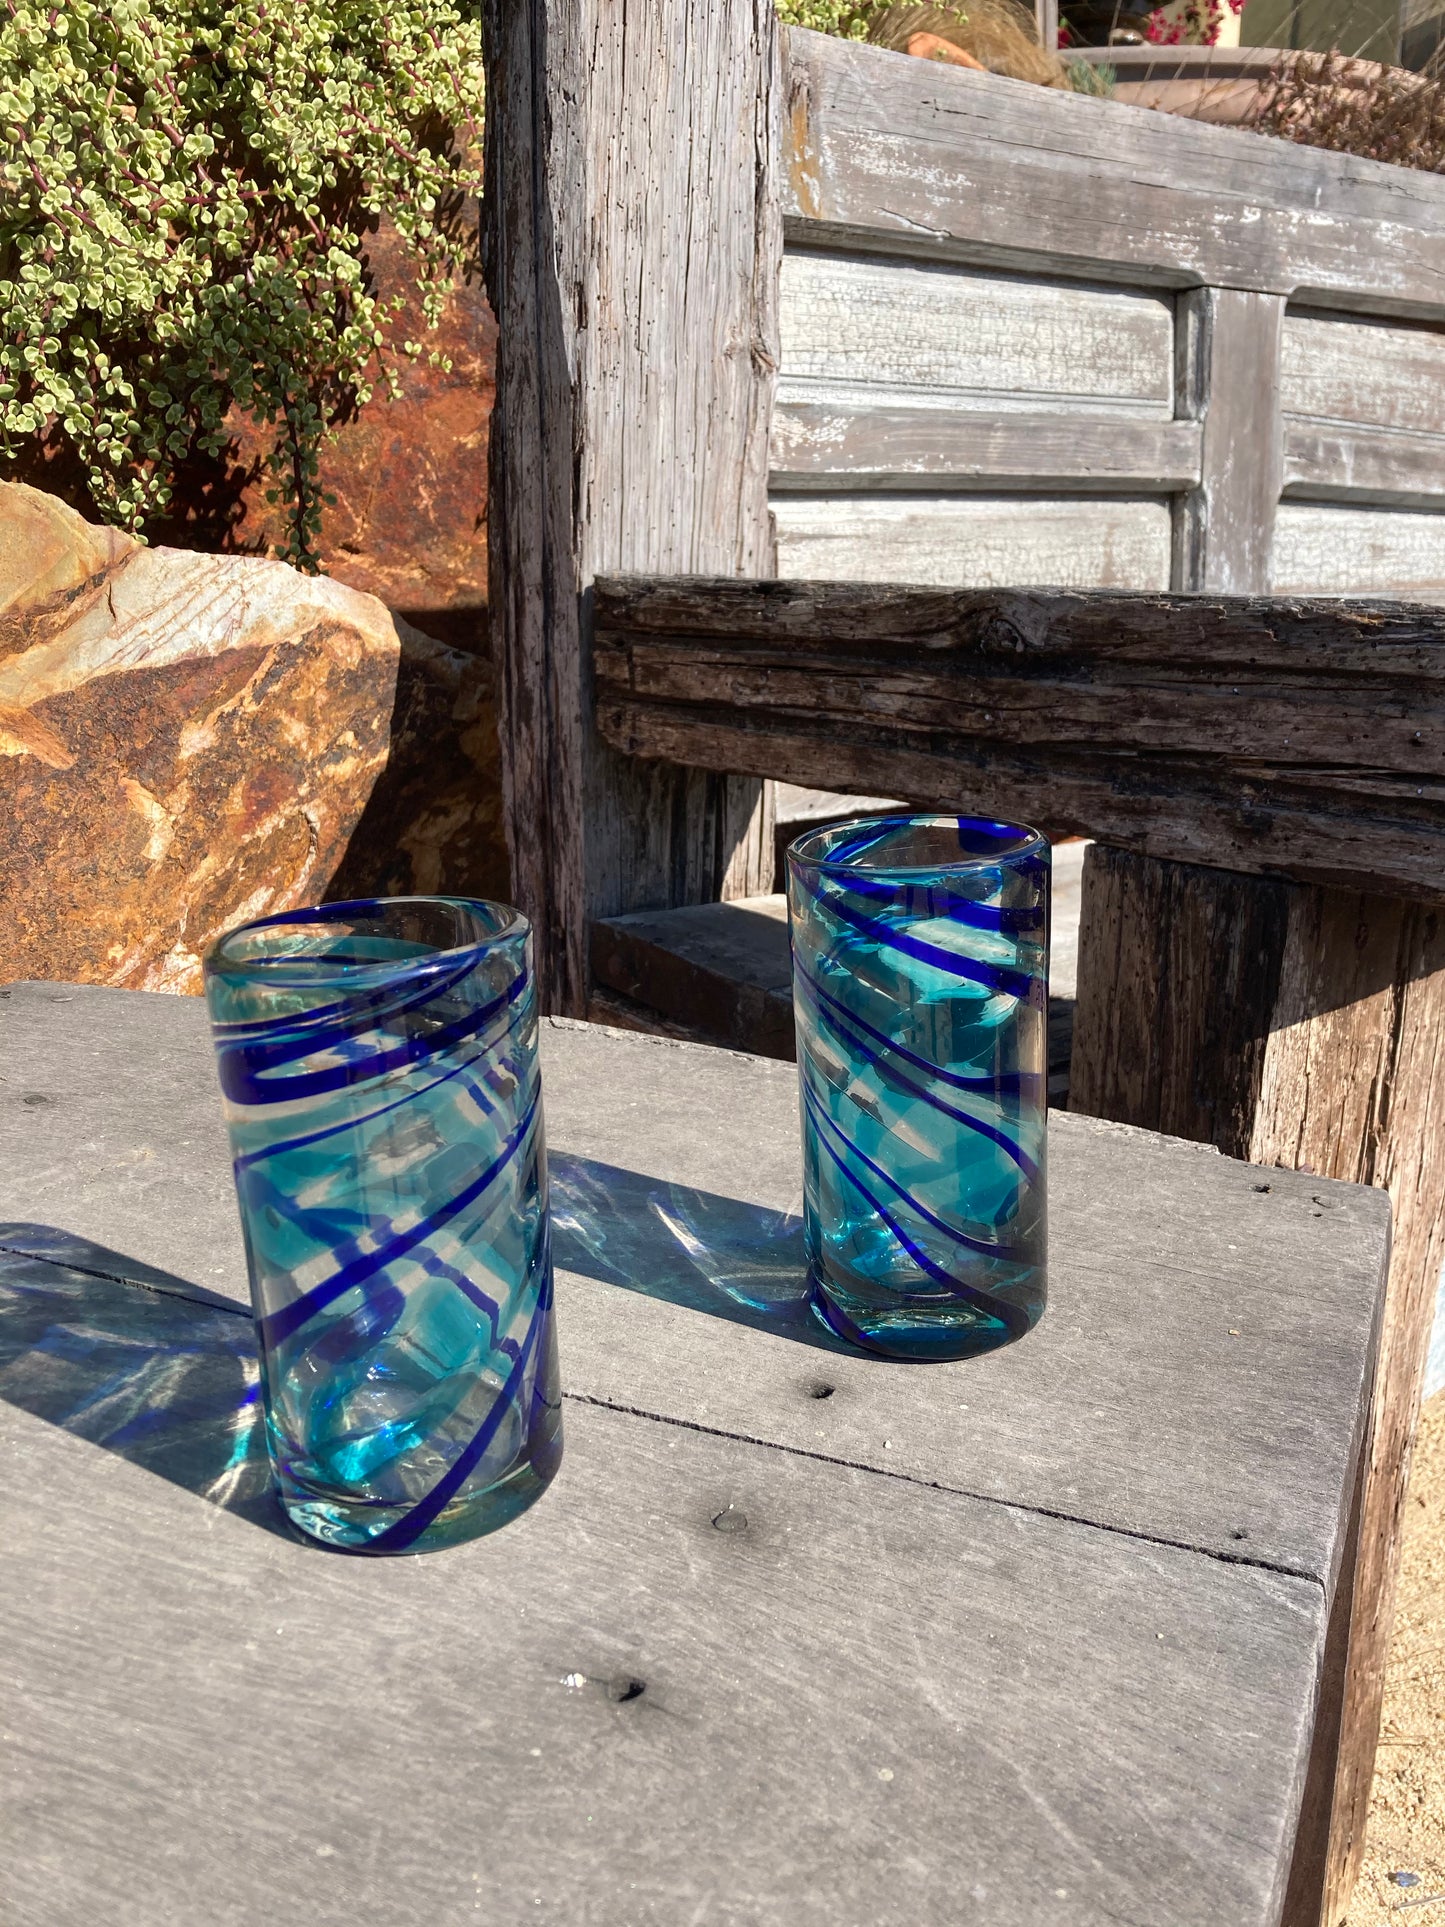 Hand Blown Water Glass - Turquoise/Blue Swirl